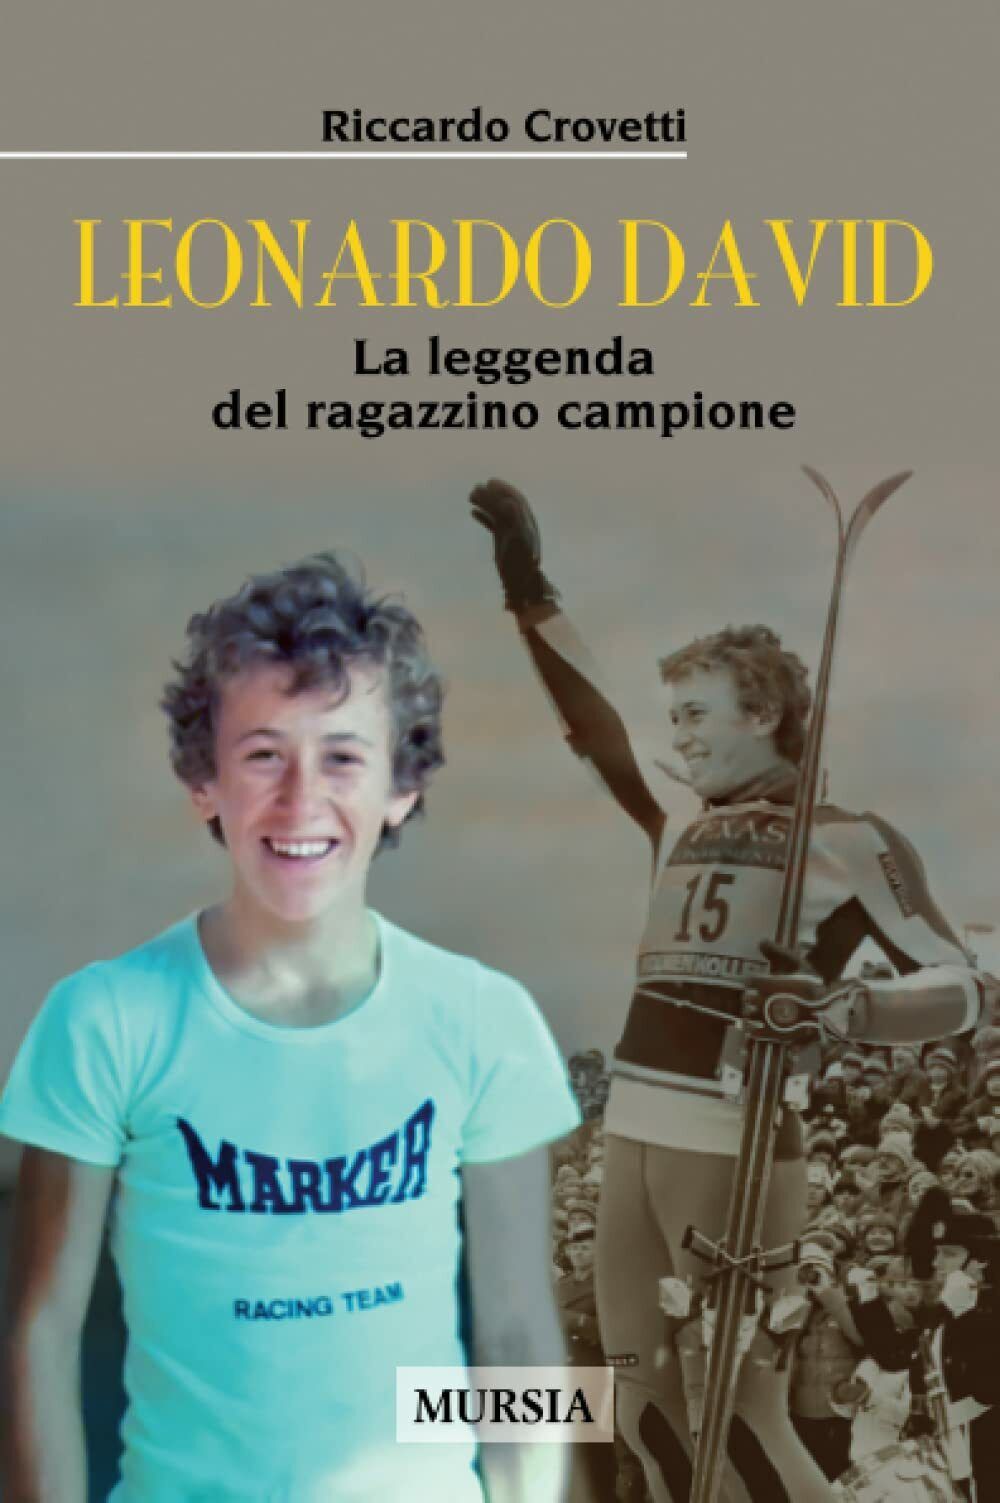 Leonardo David: La leggenda del ragazzino campione - Riccardo Crovetti - 2021